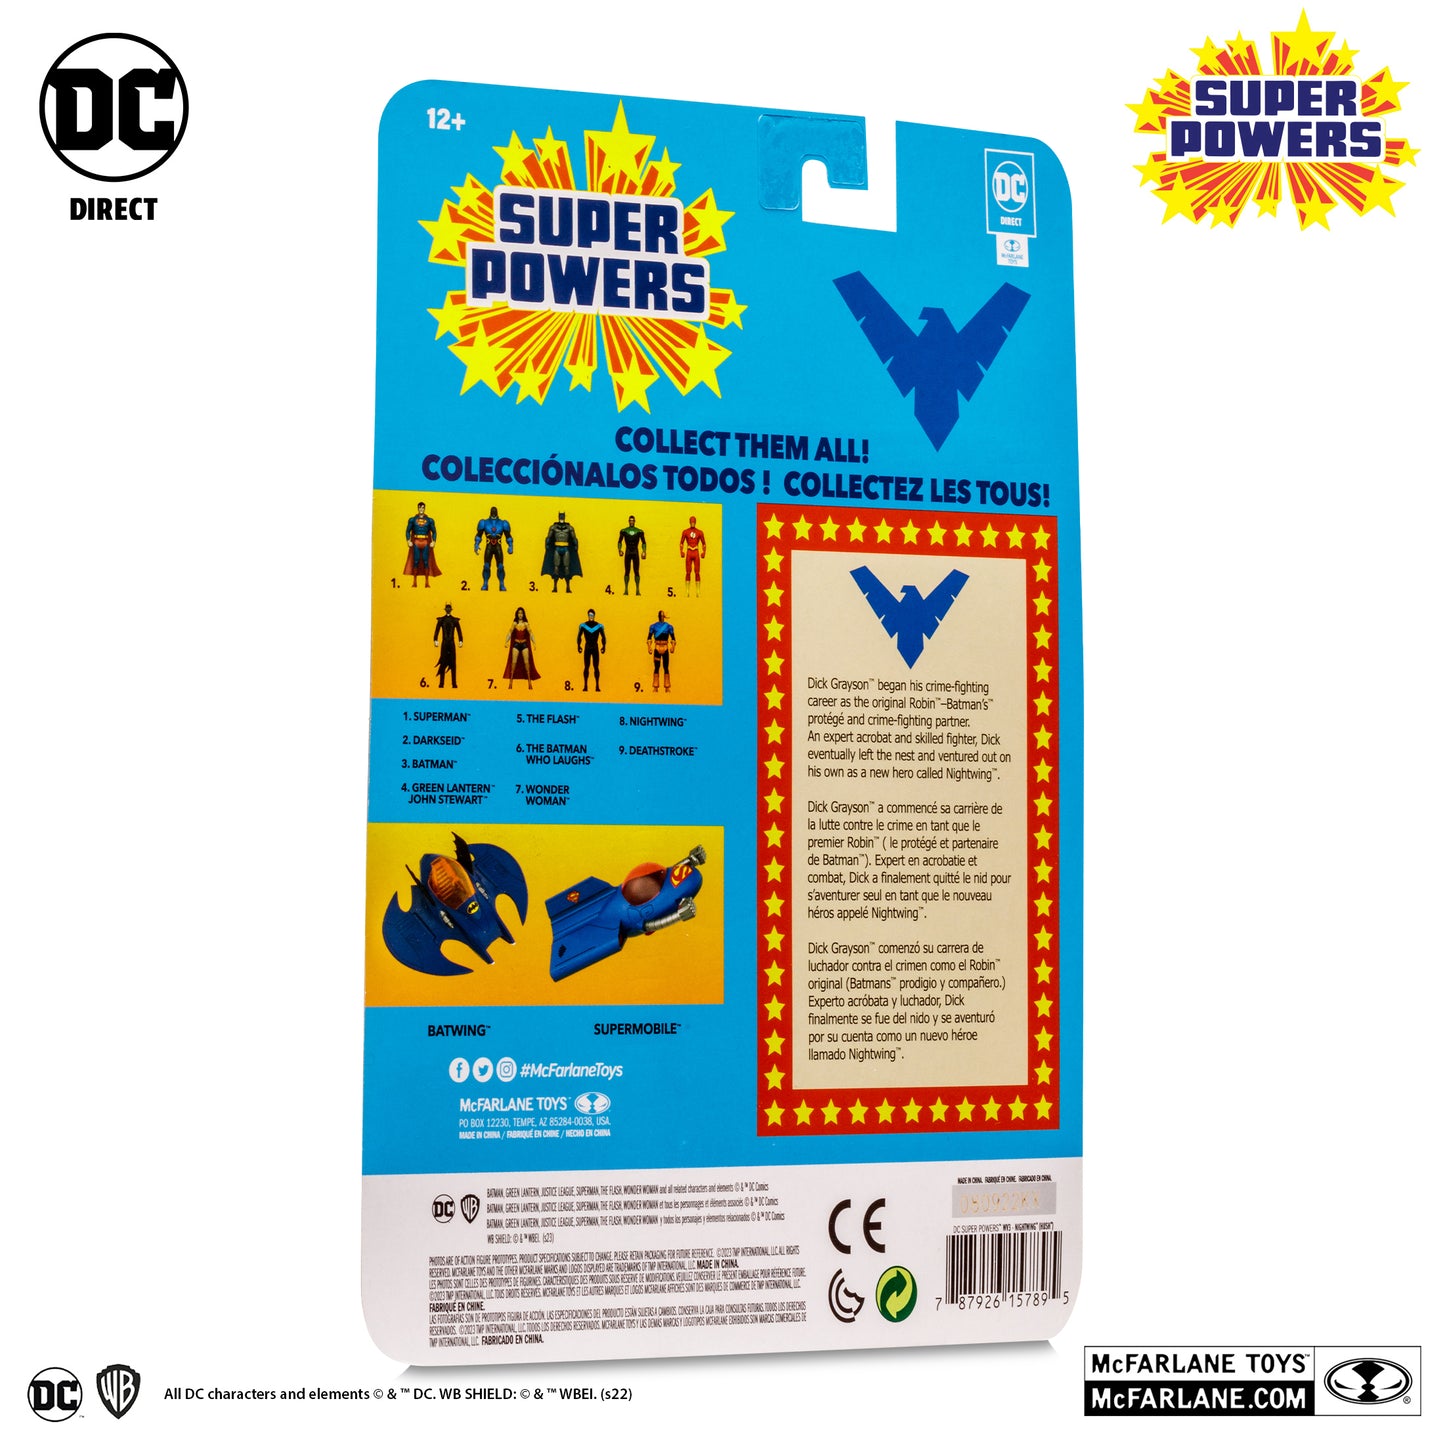 McFarlane Toys DC Direct Super Powers Nightwing